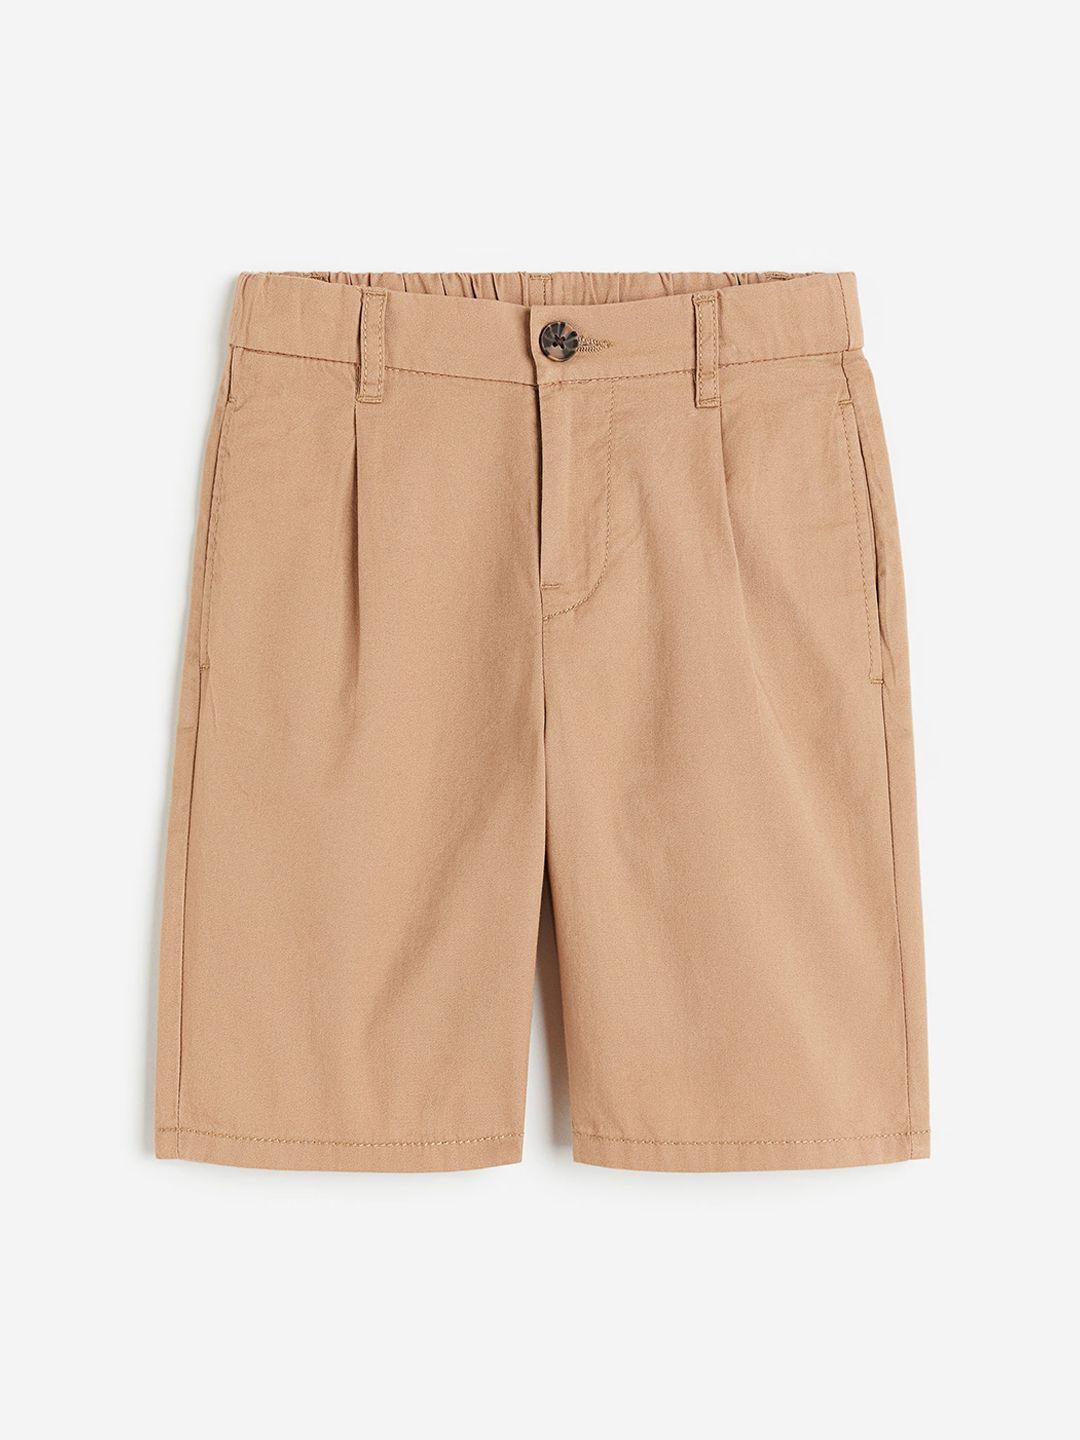 h&m cotton chino shorts